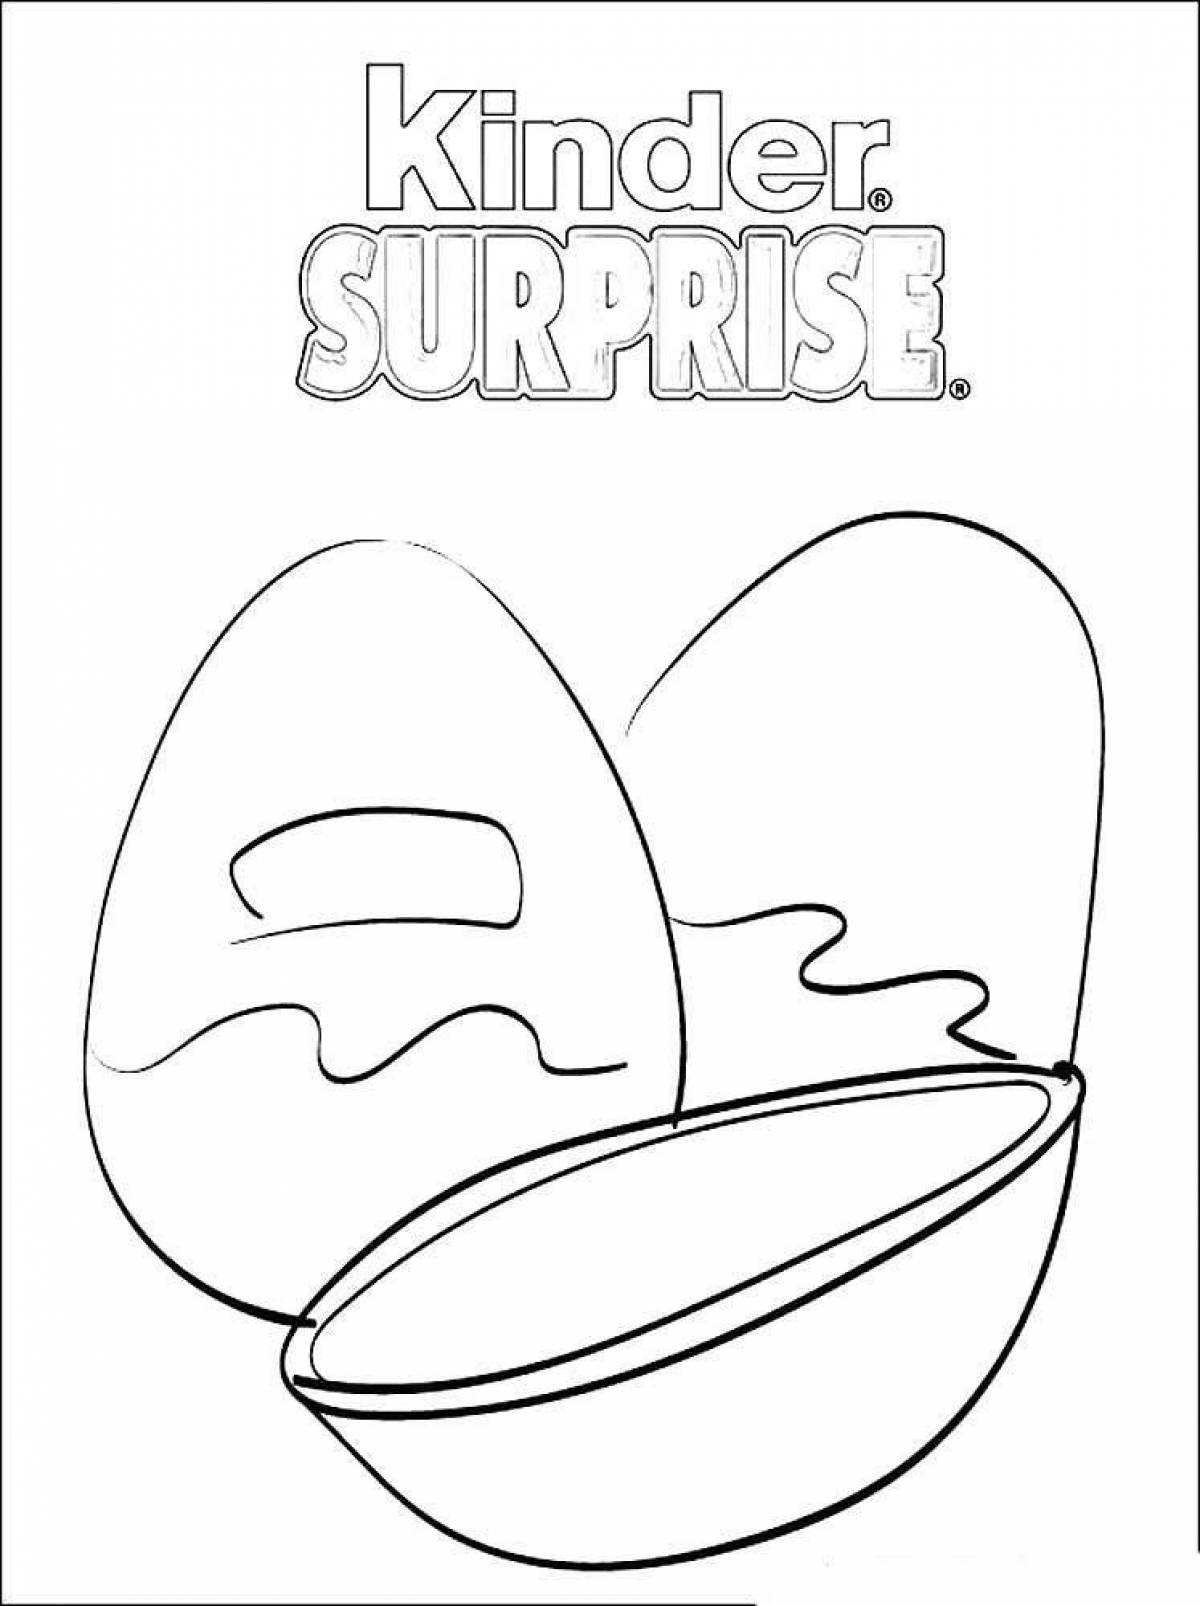 Kinder surprise coloring page